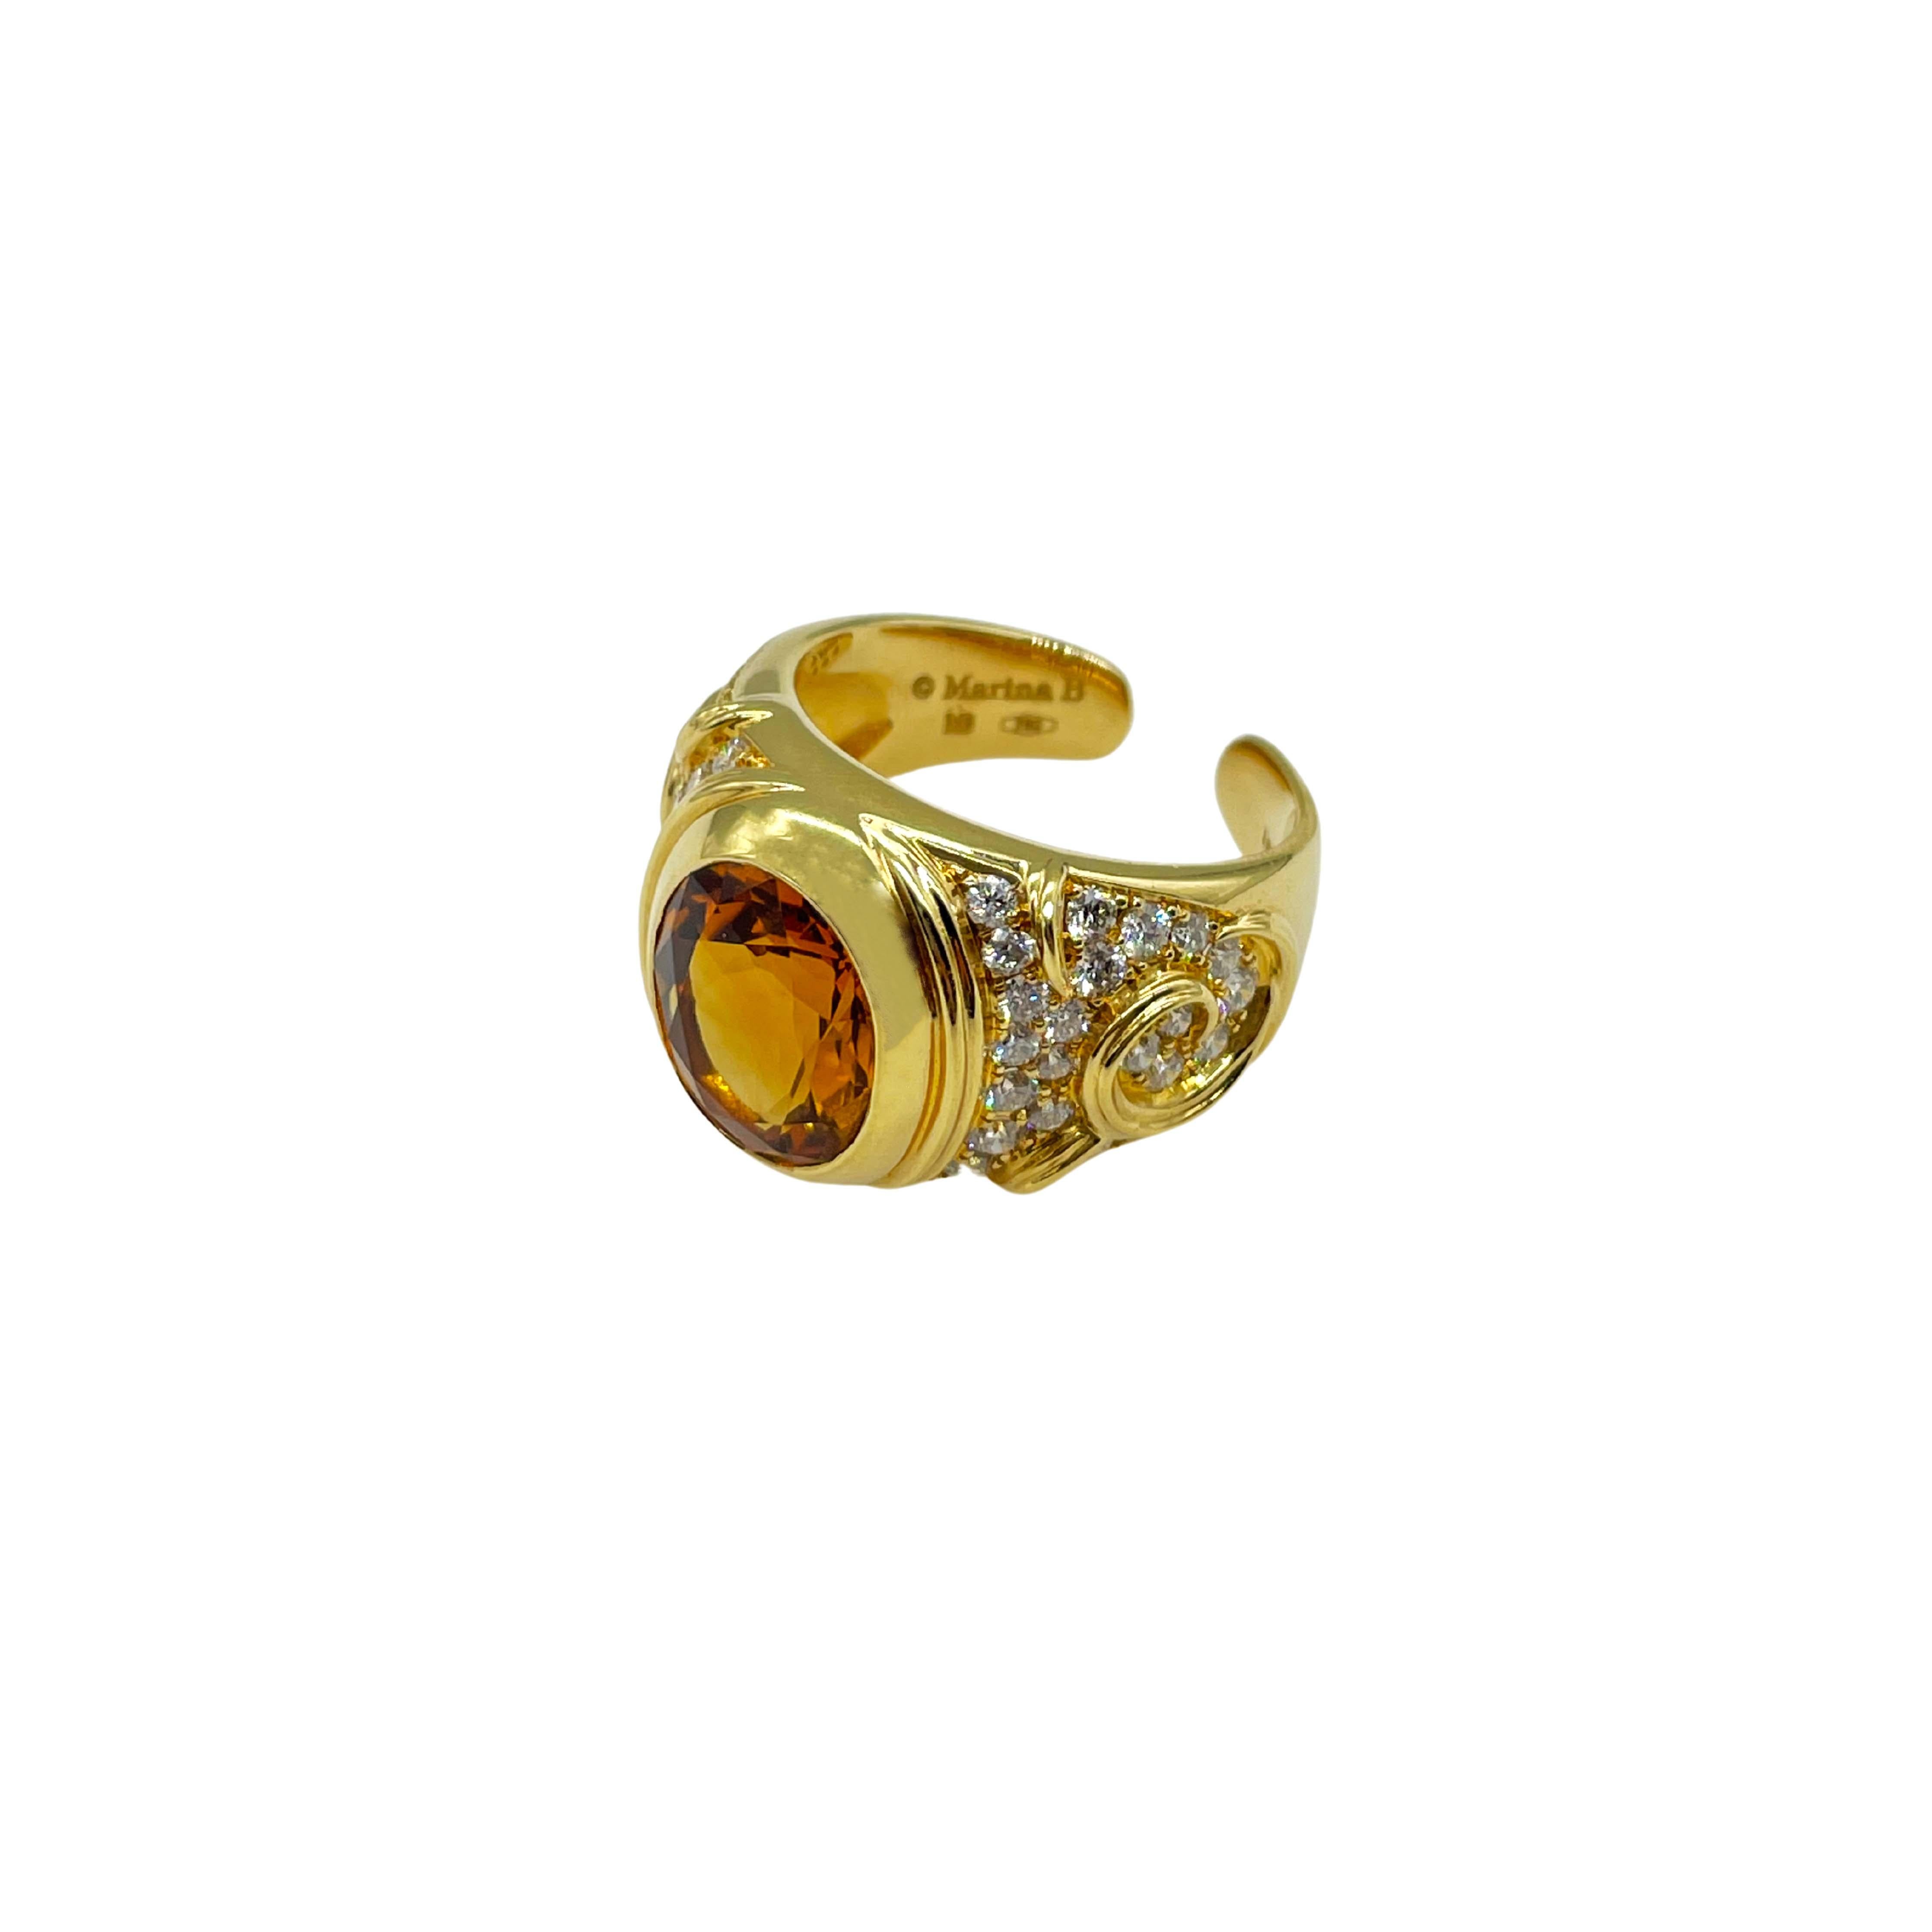 A Marina B 18k Yellow Gold, Citrine, and Diamond Ring. Made in Italy, circa 2010.

